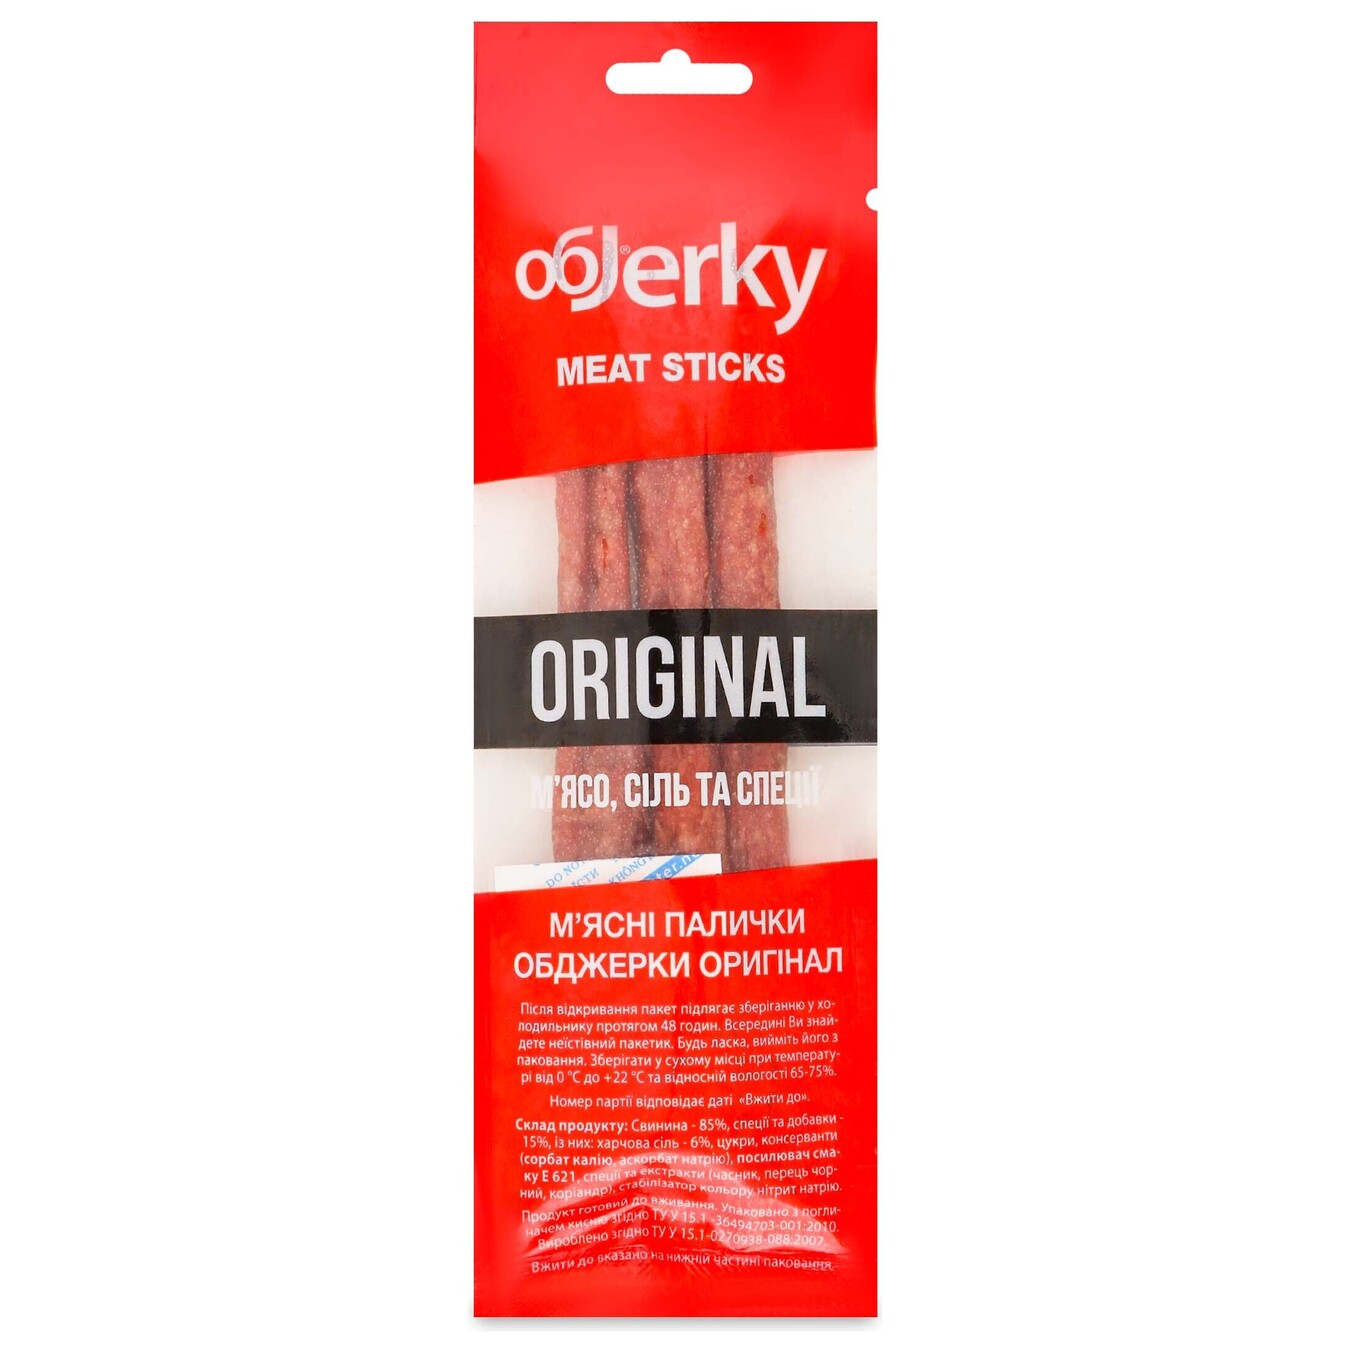 Objerky Meat sticks Original 40g